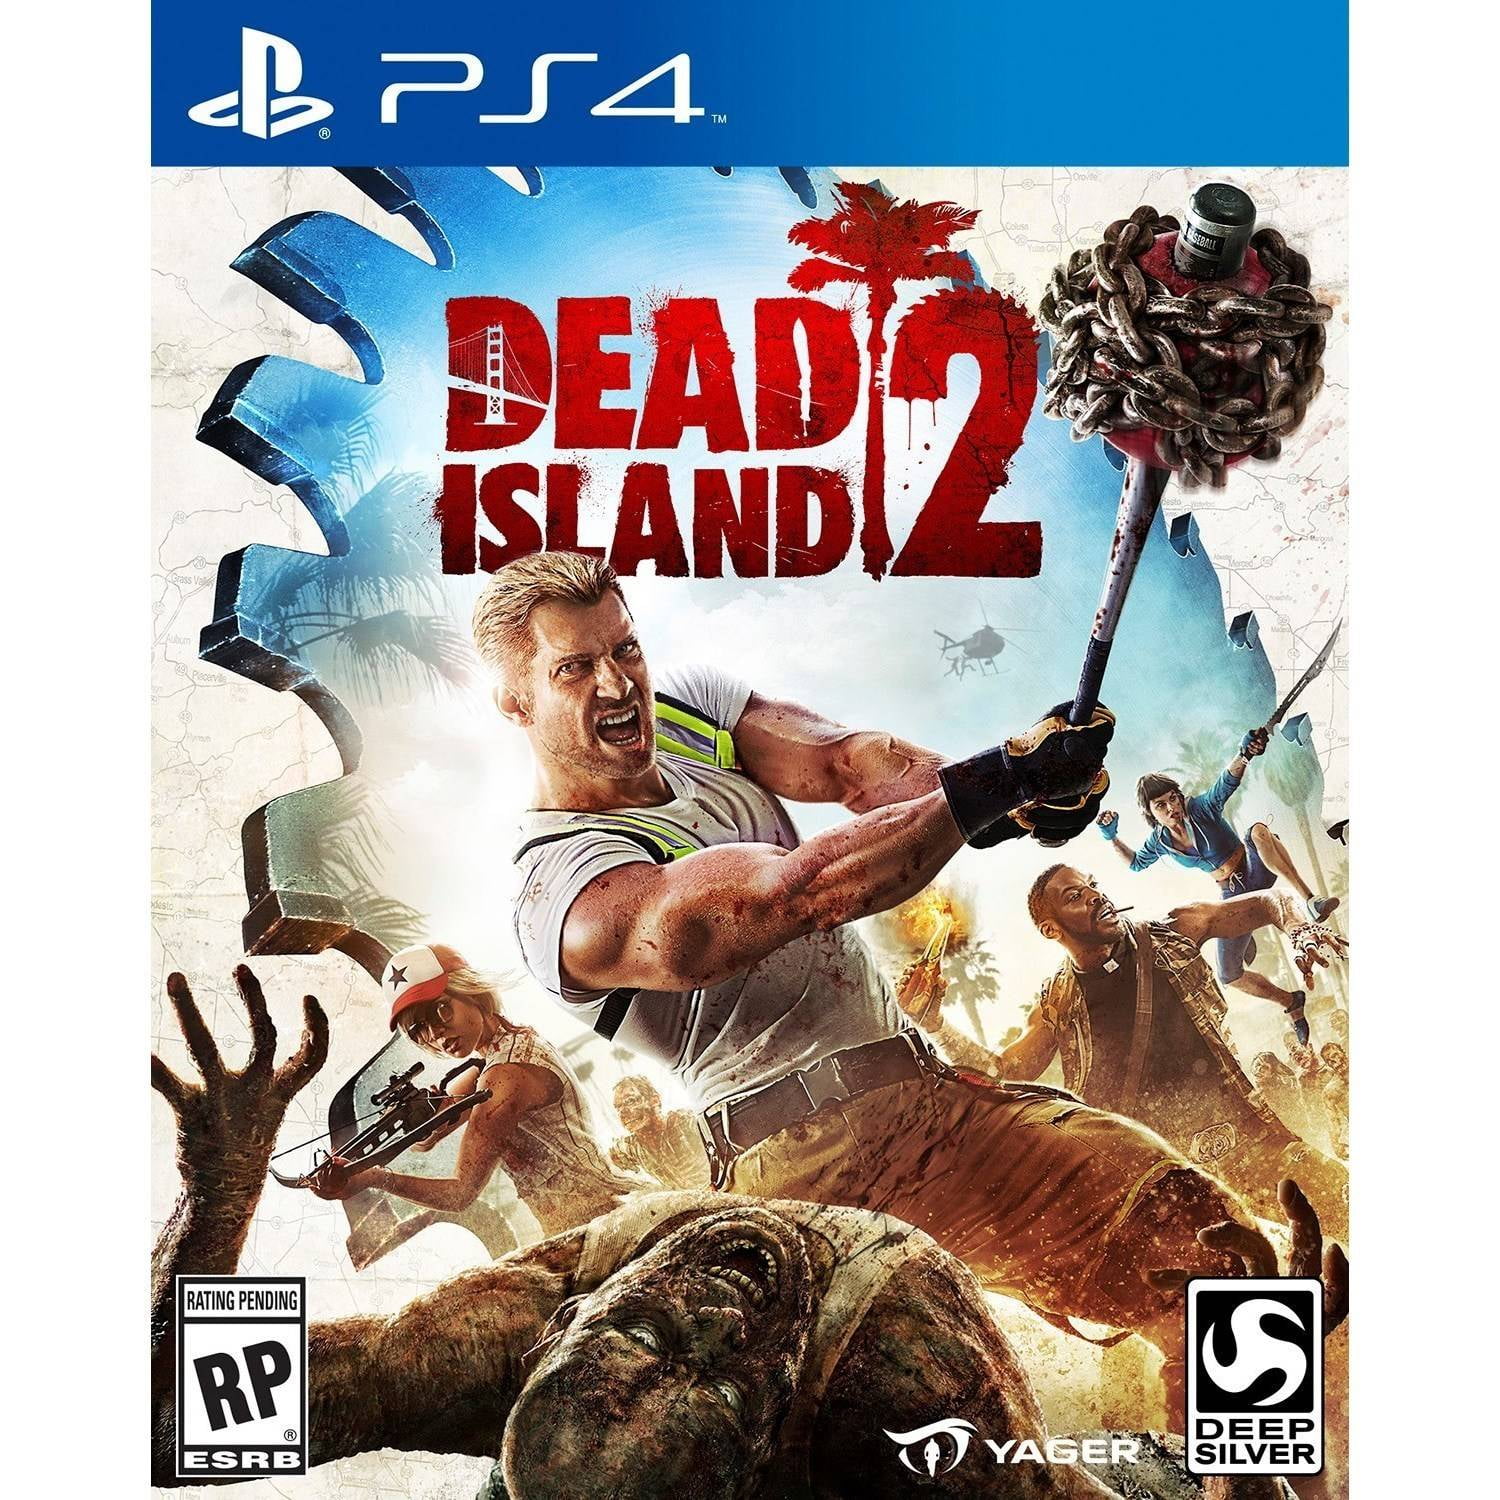 ufuldstændig magasin by Dead Island 2, Square Enix, PlayStation 4, [Physical], 816819011959 -  Walmart.com